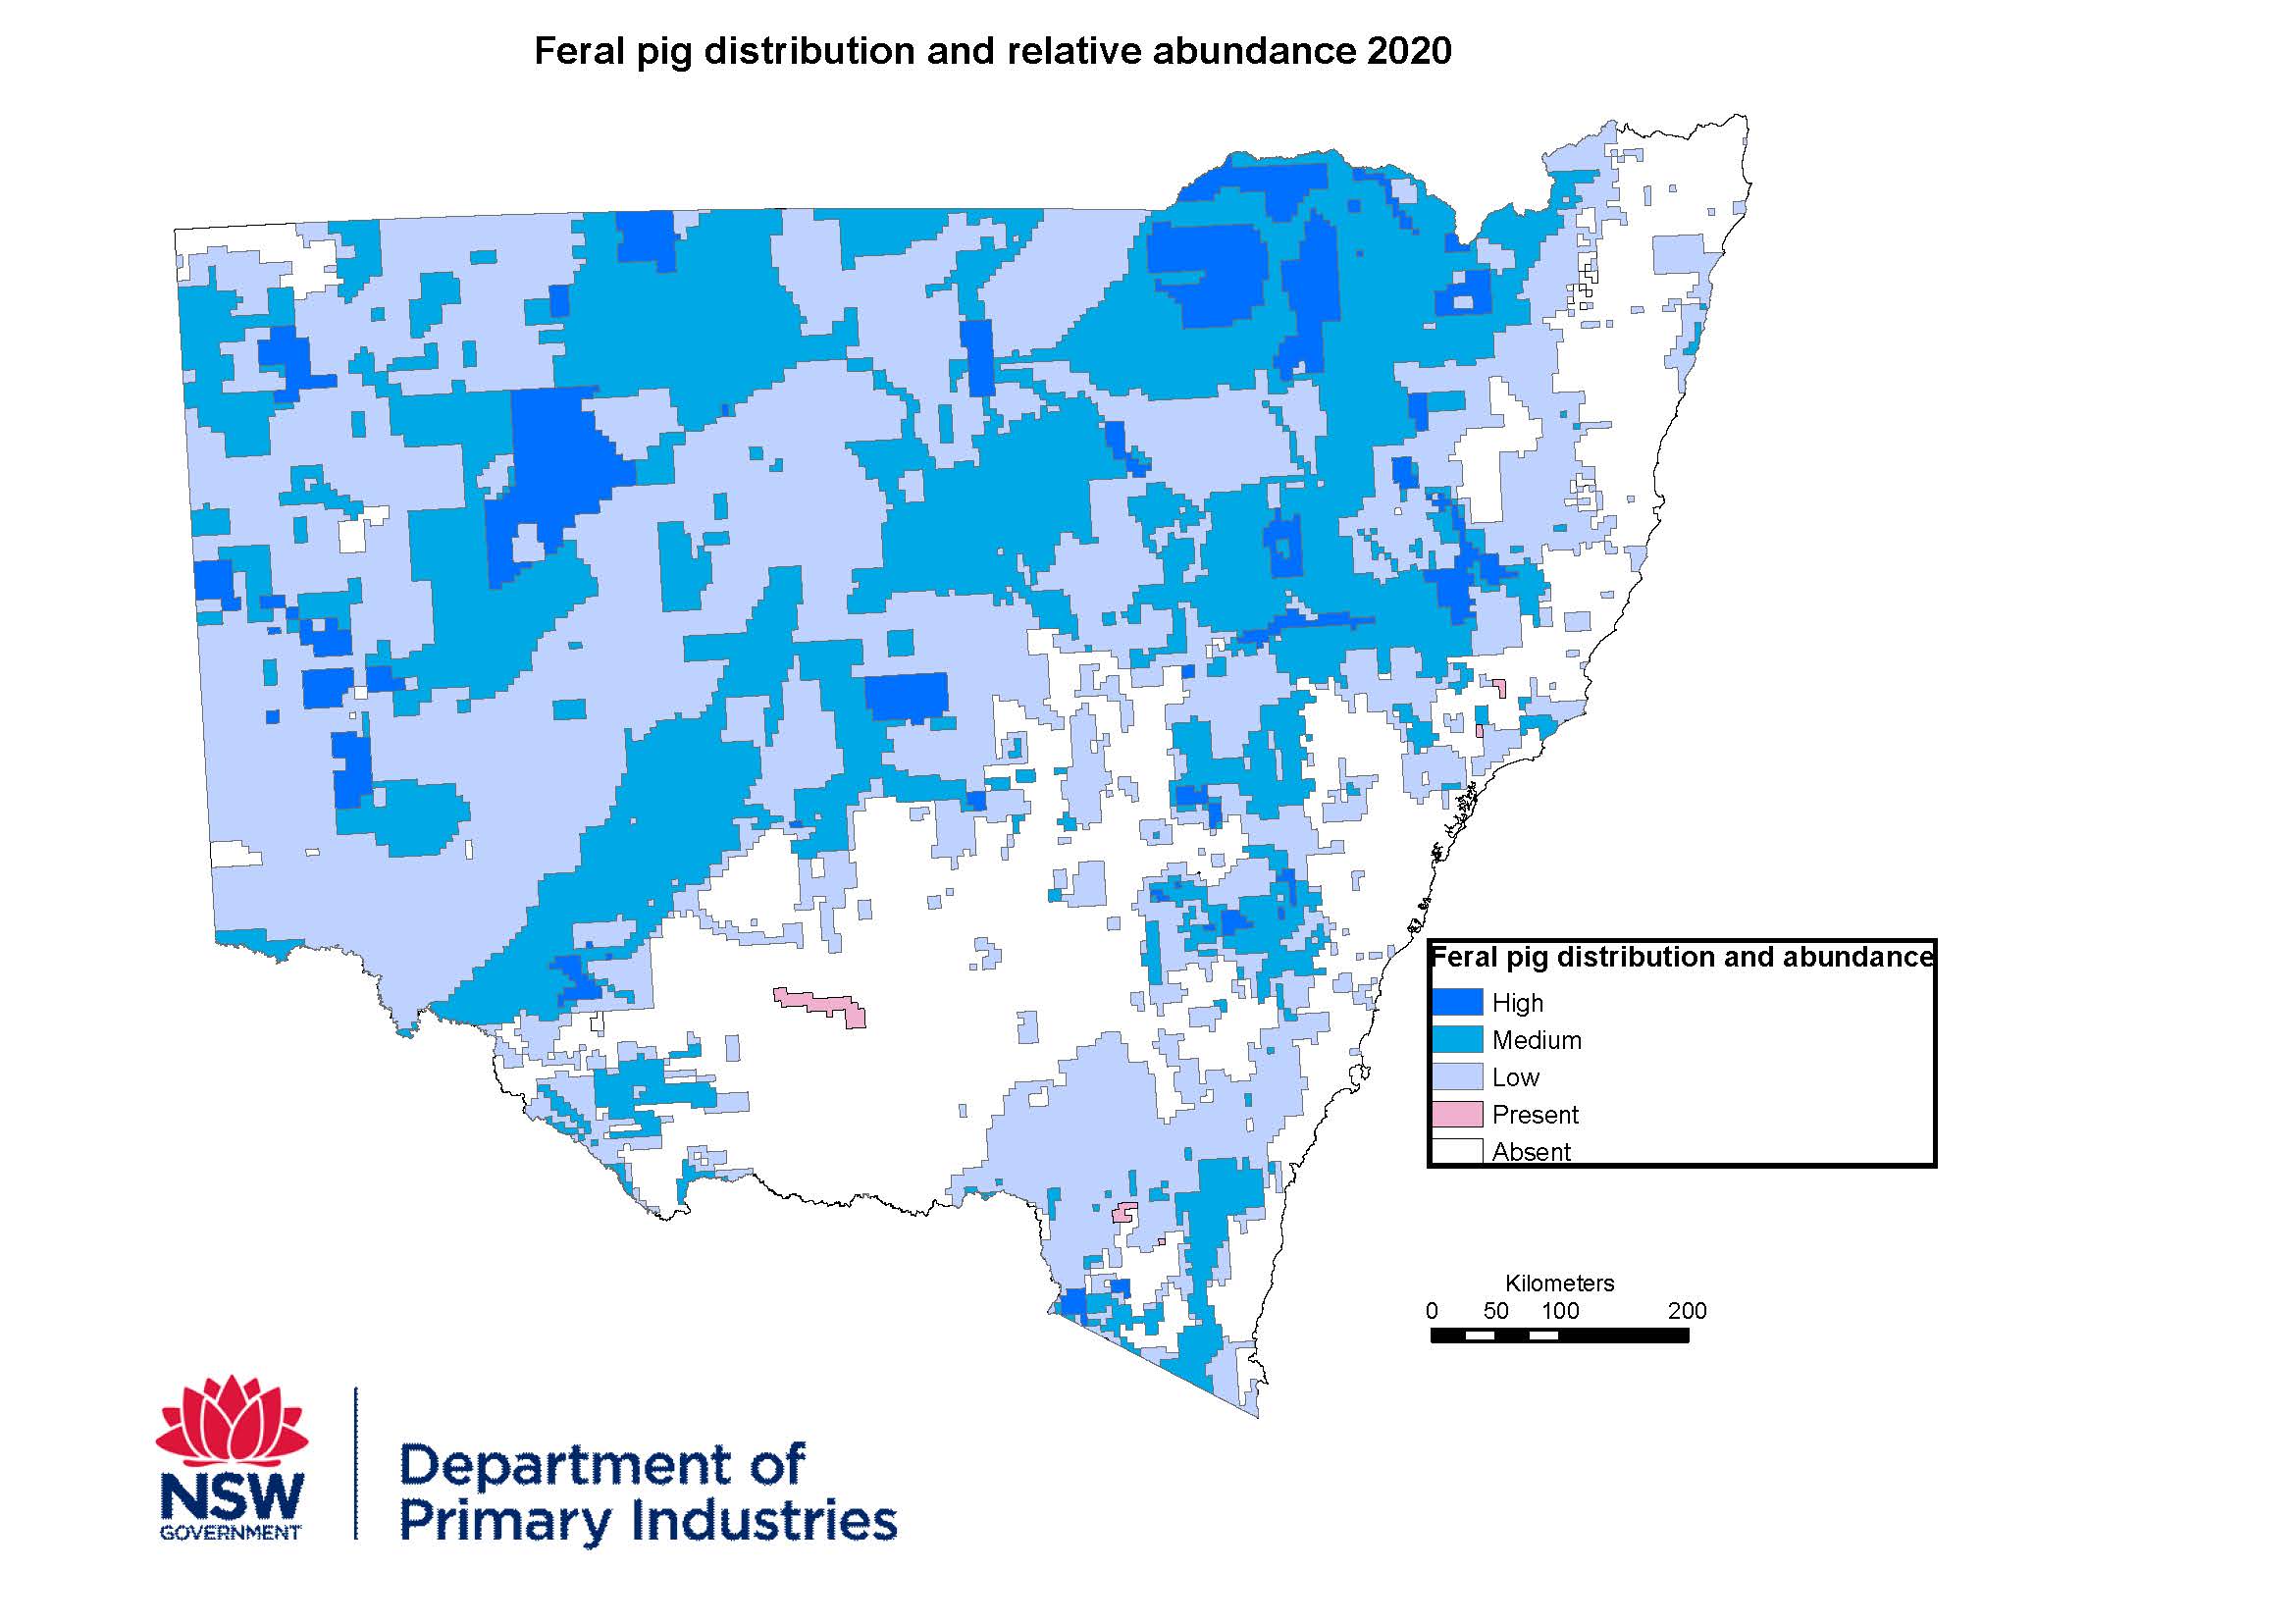 Feral pig distribution and abundance map 2020 